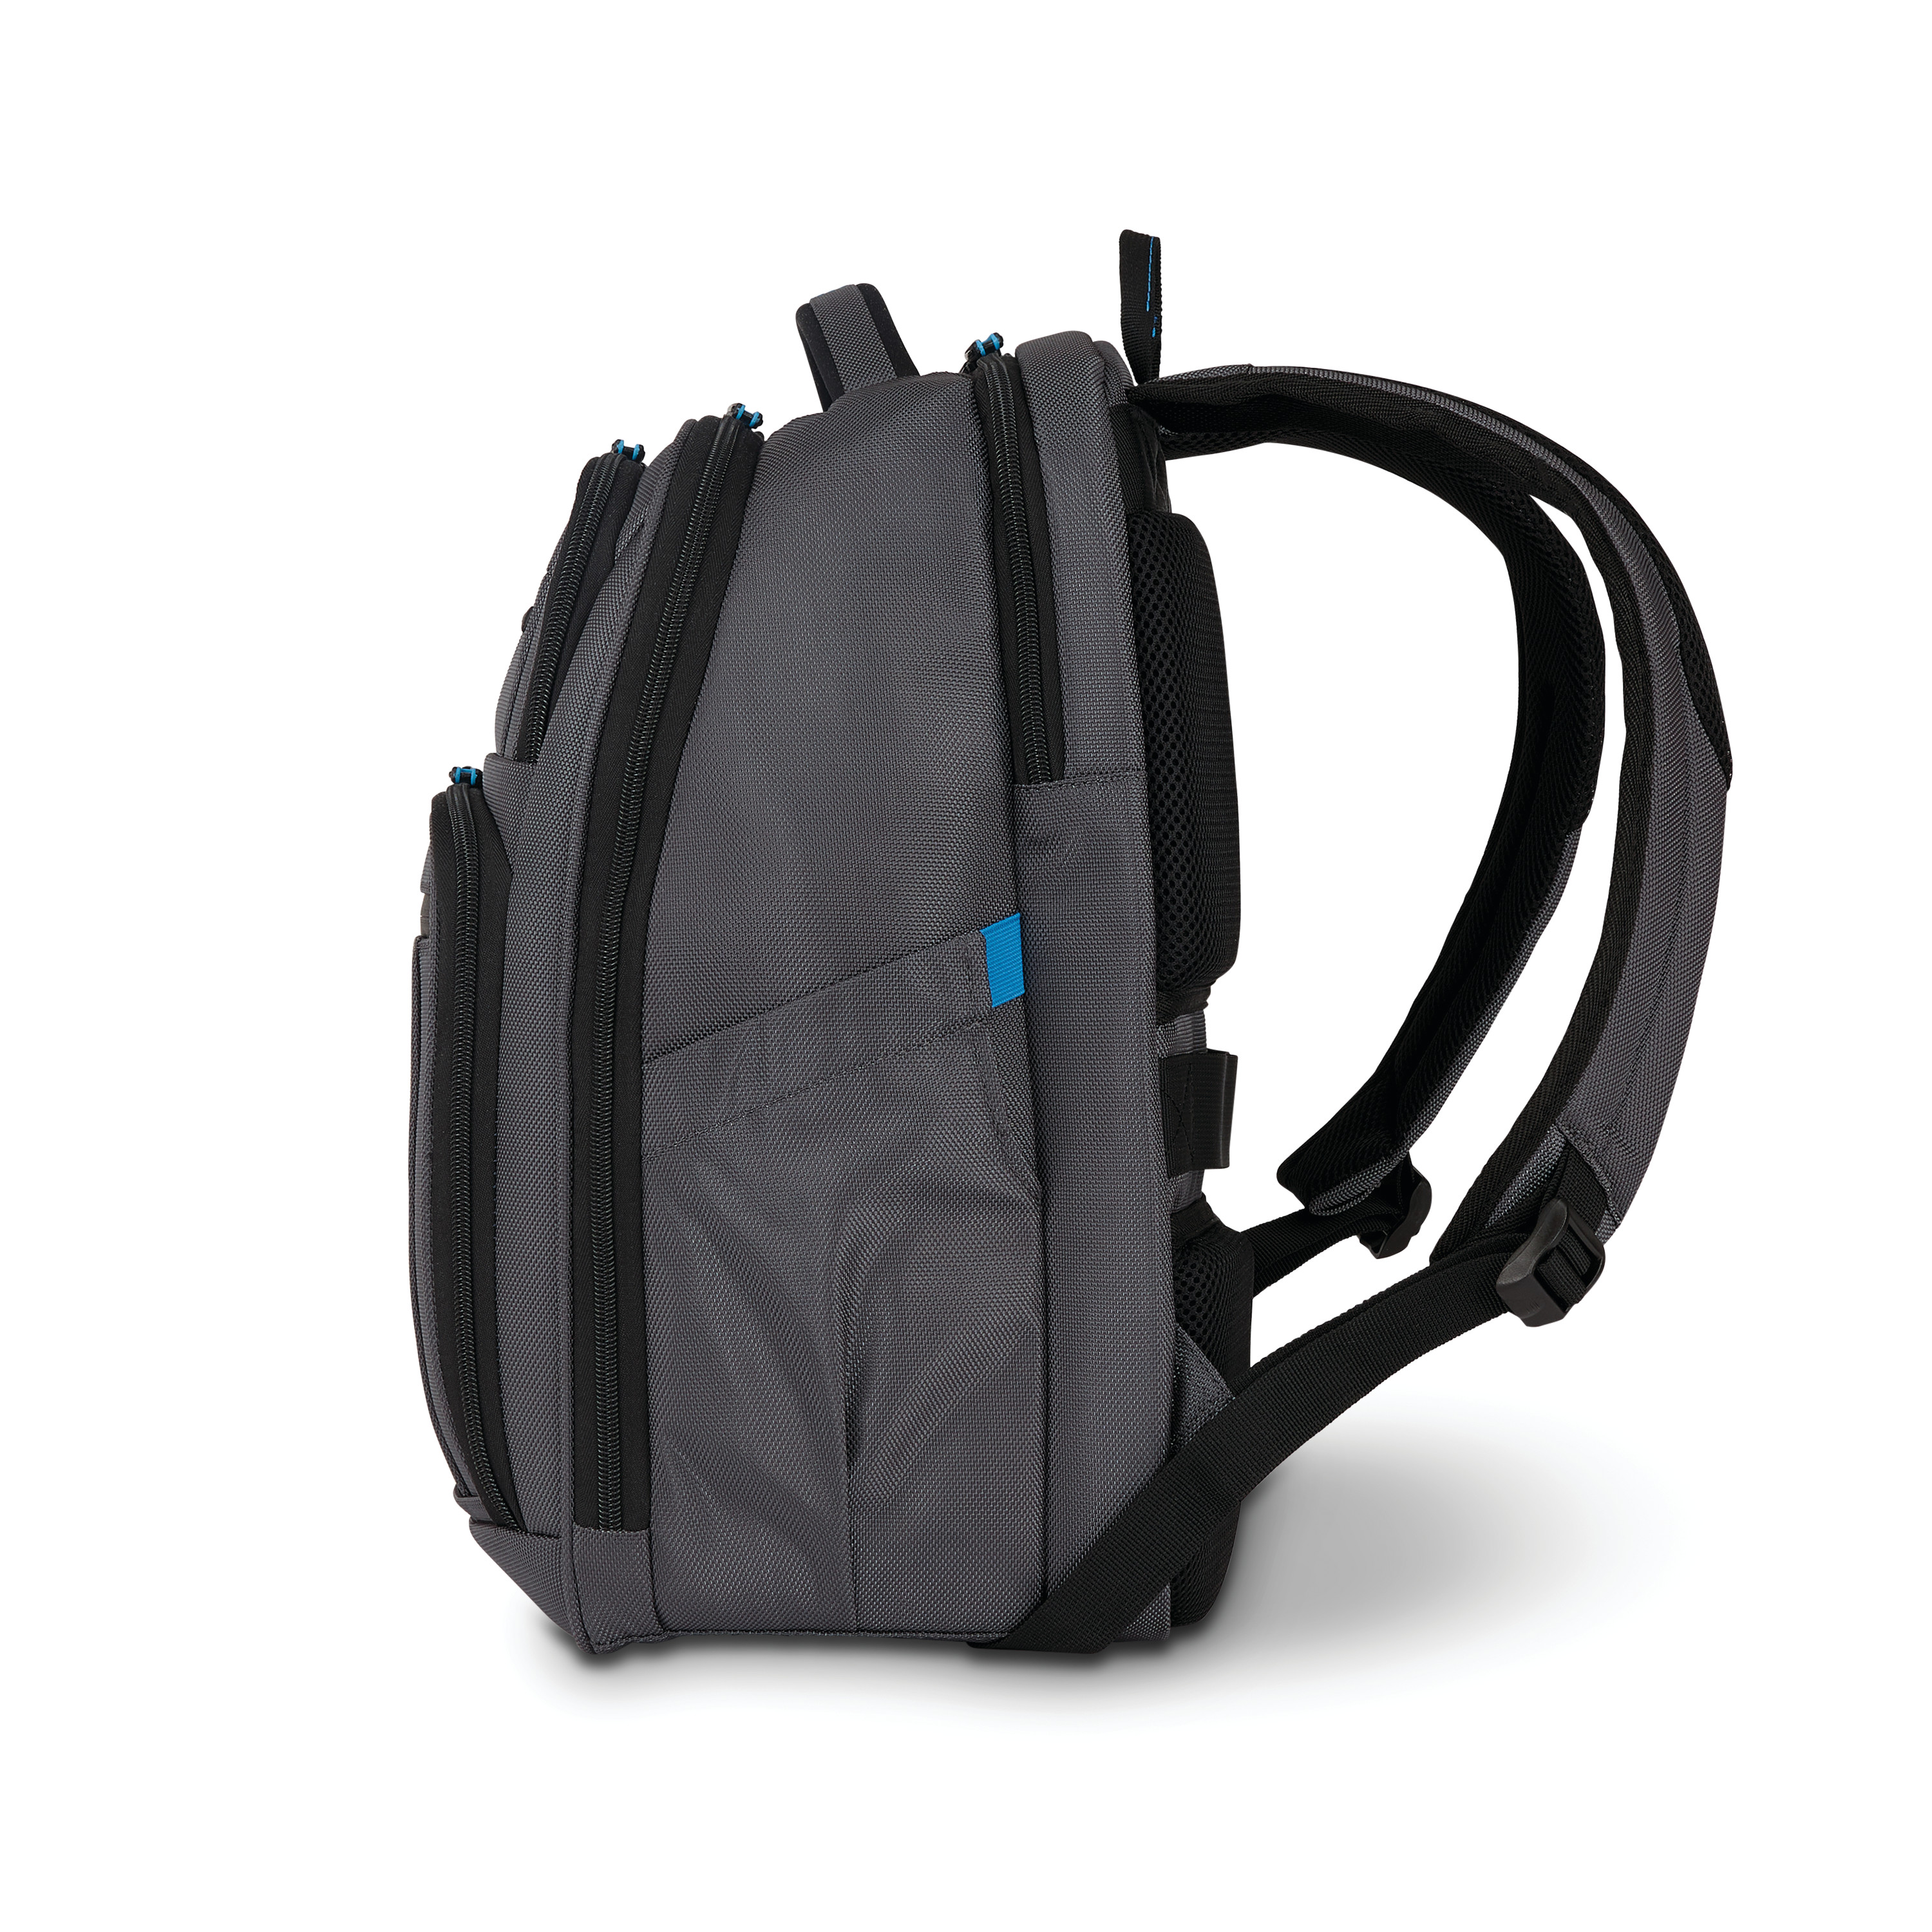 US for Novex Backpack Buy Samsonite Laptop 74.99 USD |